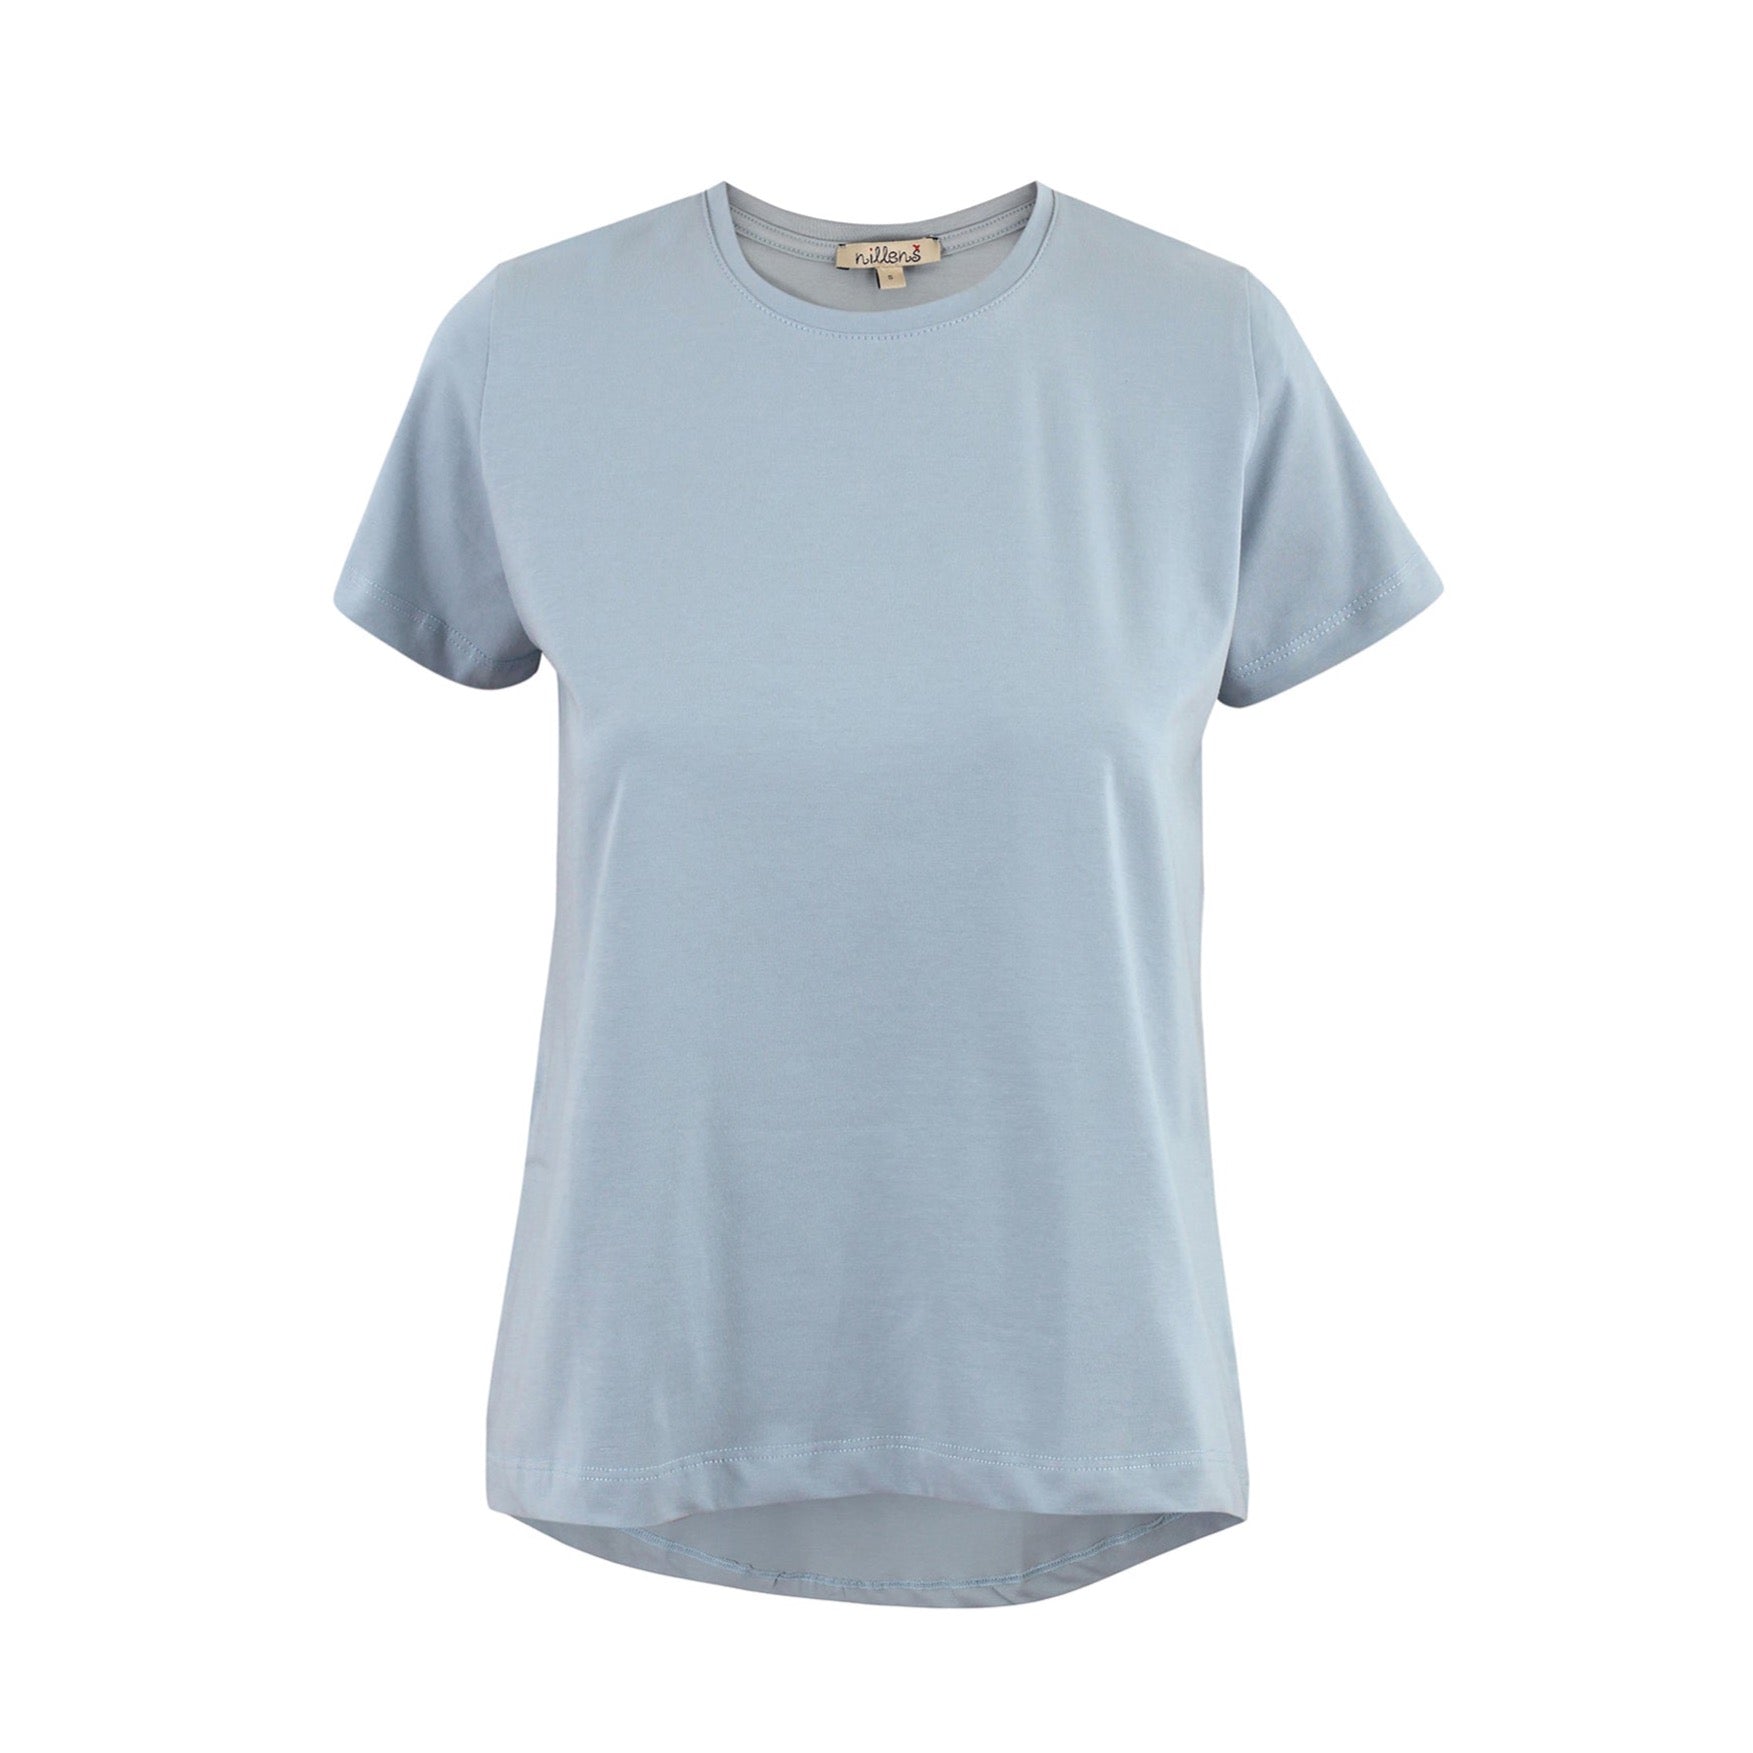 Light Blue Round Neck T-Shirt